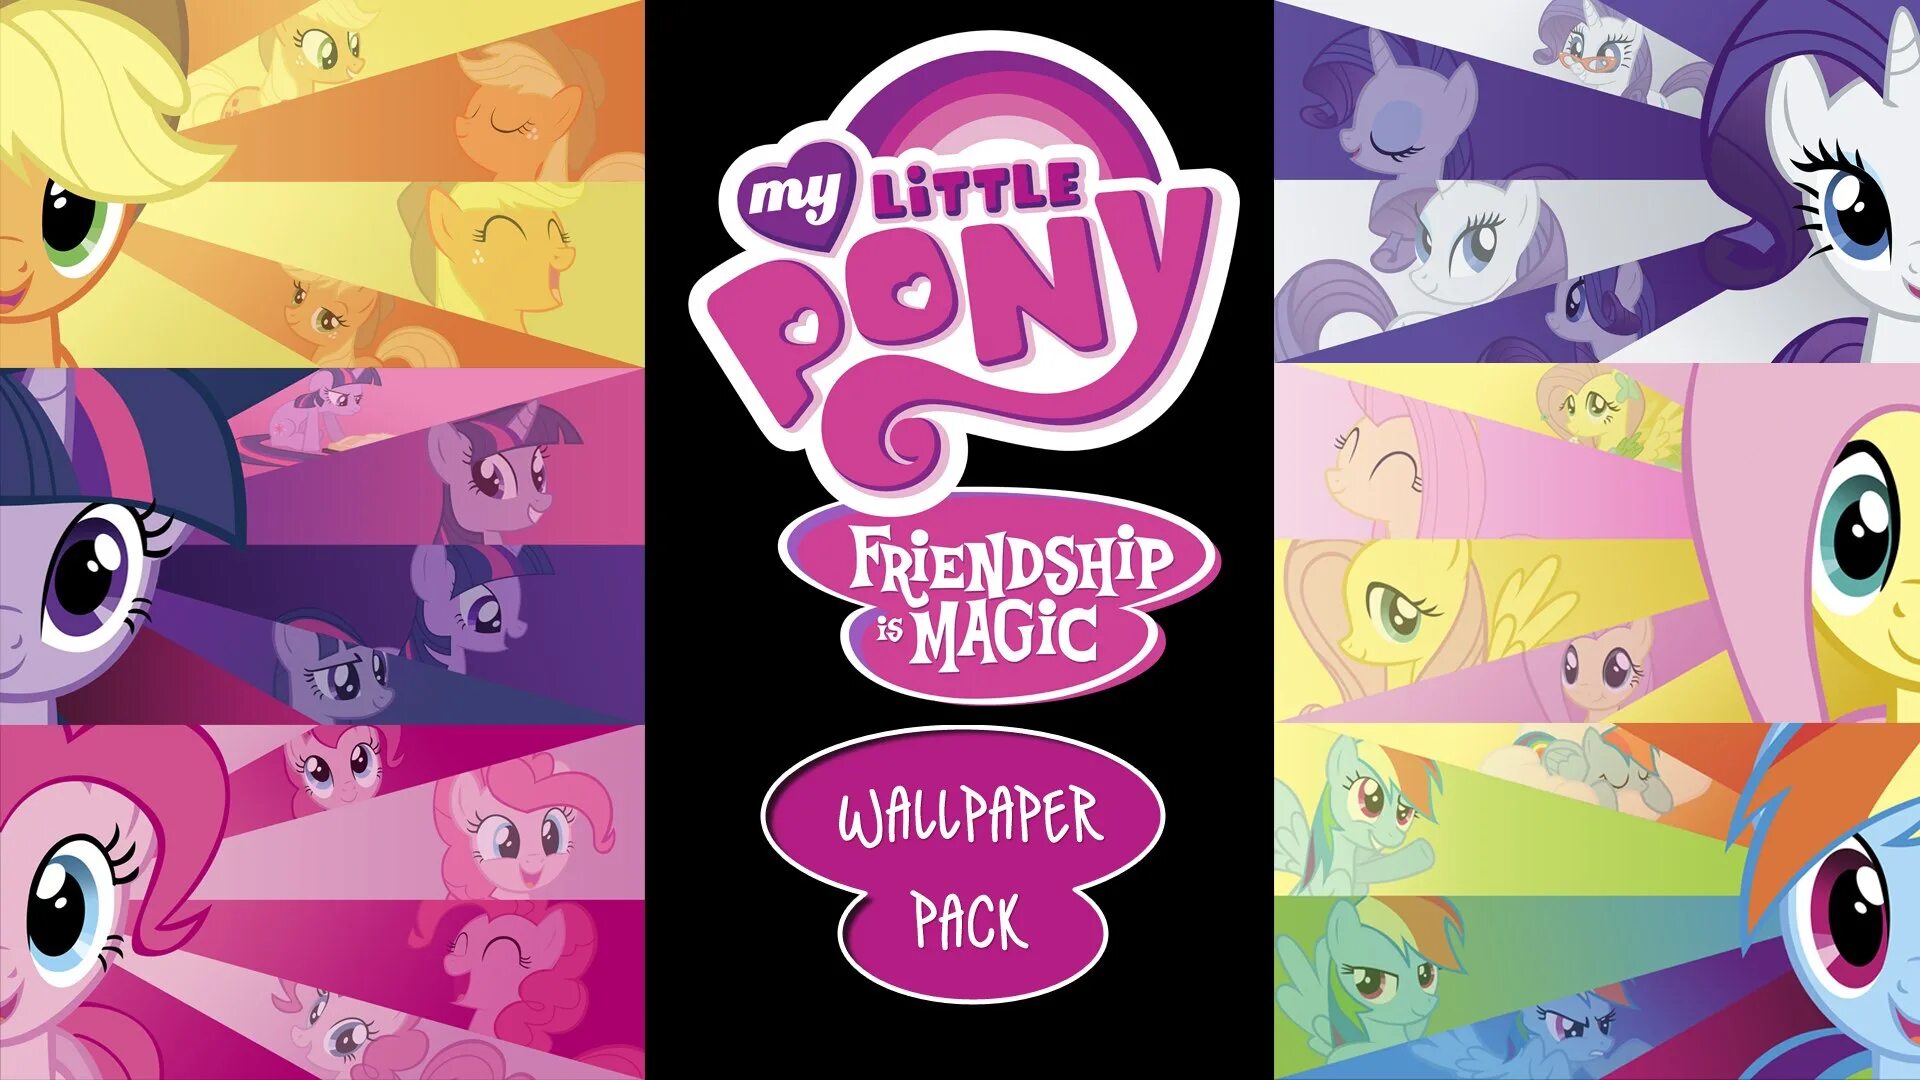 Песни май литл на русском. My little Pony Дружба это чудо. My little Pony Friendship is Magic. Пони френдшип из Мэджик. My little Pony плакат.